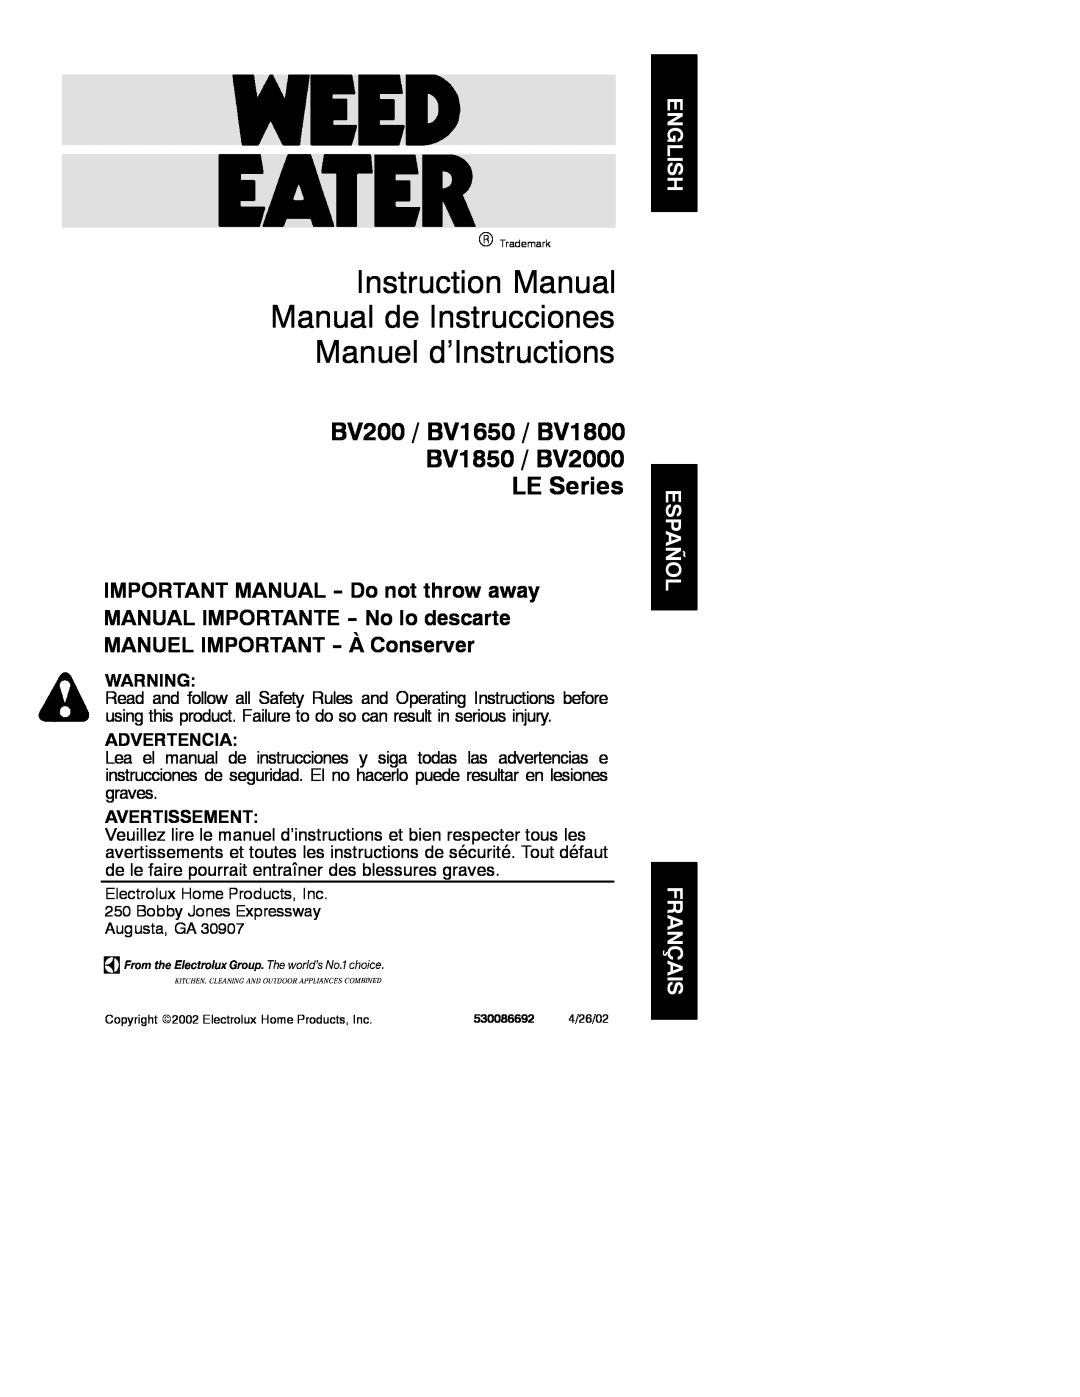 Weed Eater 530086692 instruction manual BV200 / BV1650 / BV1800 BV1850 / BV2000 LE Series, Advertencia, Avertissement 